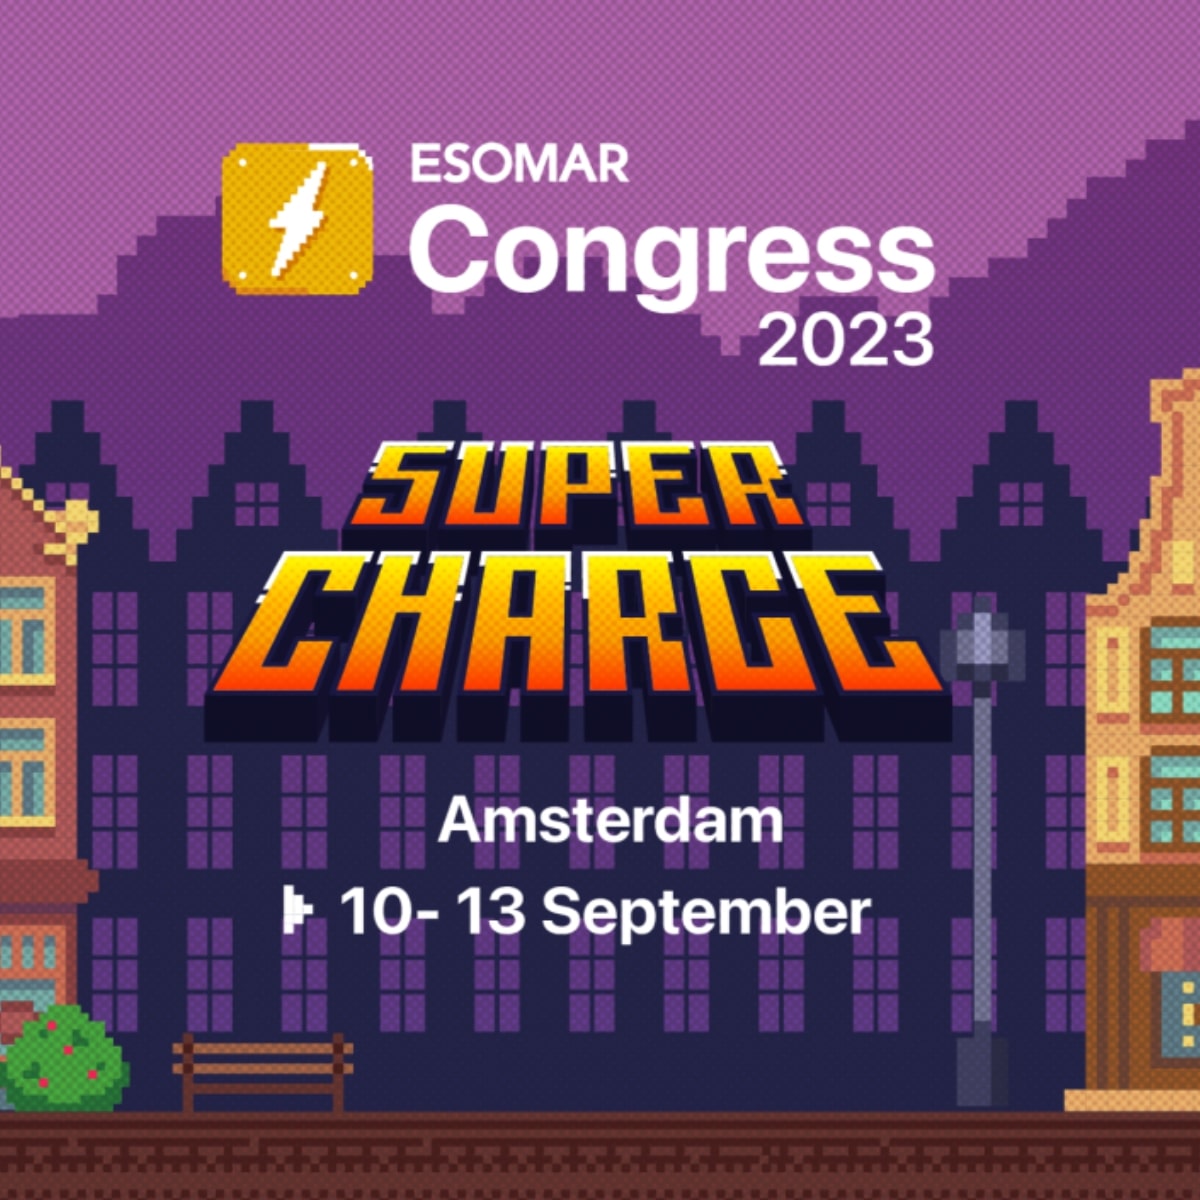 Stratega at Esomar Congress Amsterdam 2023